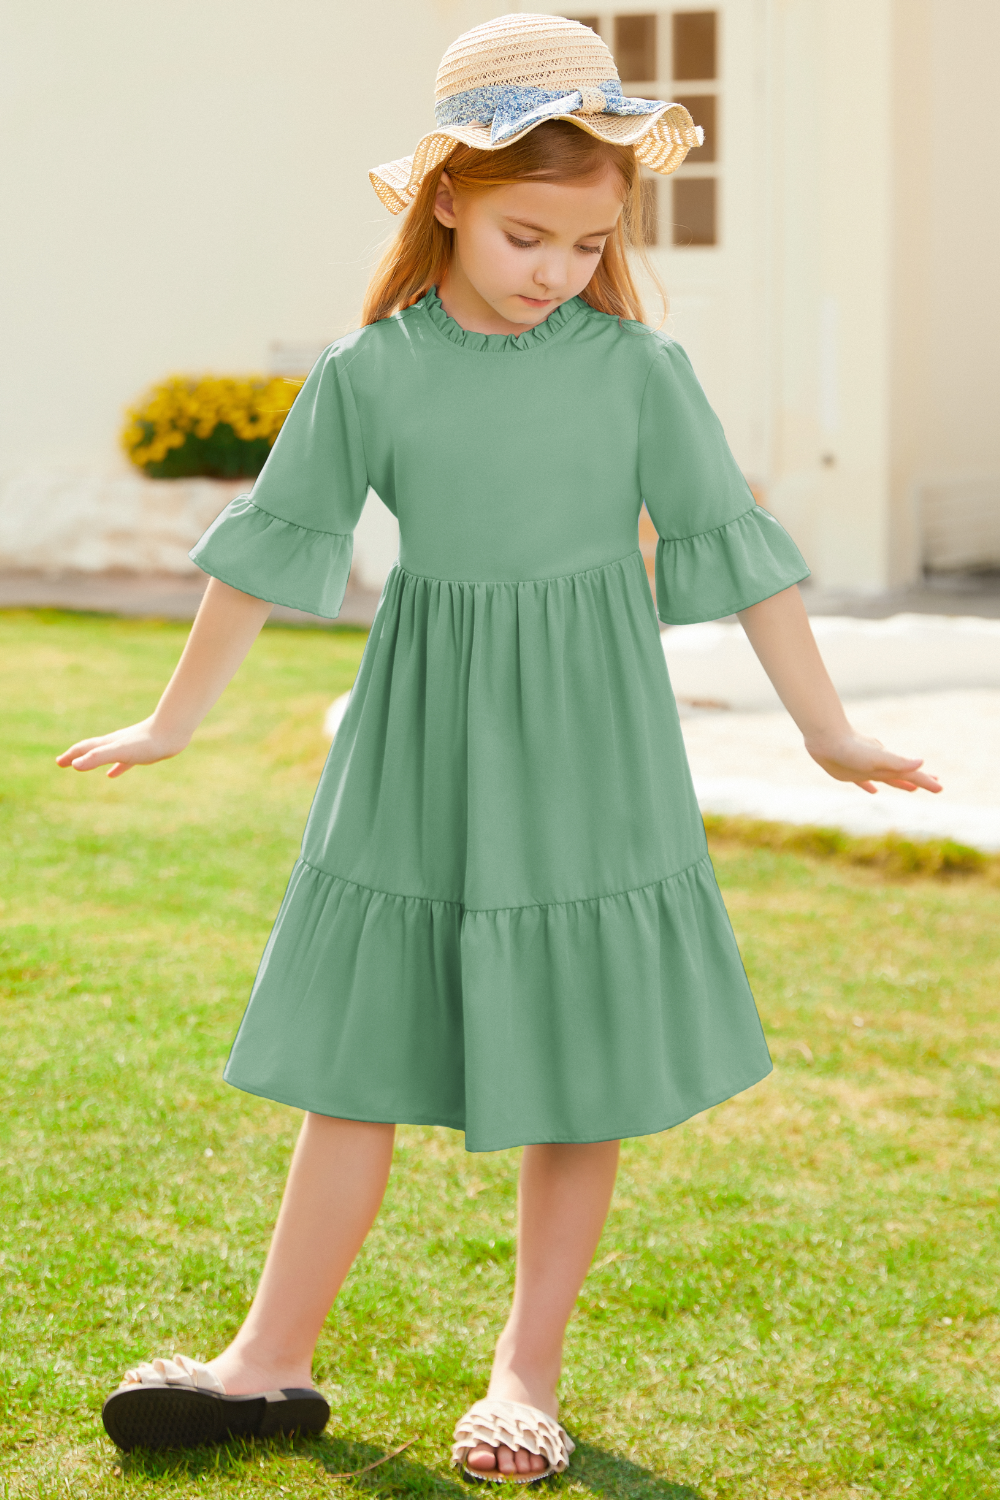 【Only $9.99】GRACE KARIN Kids Bell Sleeve Tiered Dress 1/2 Sleeve Crew Neck V-Back Flared A-Line Dress